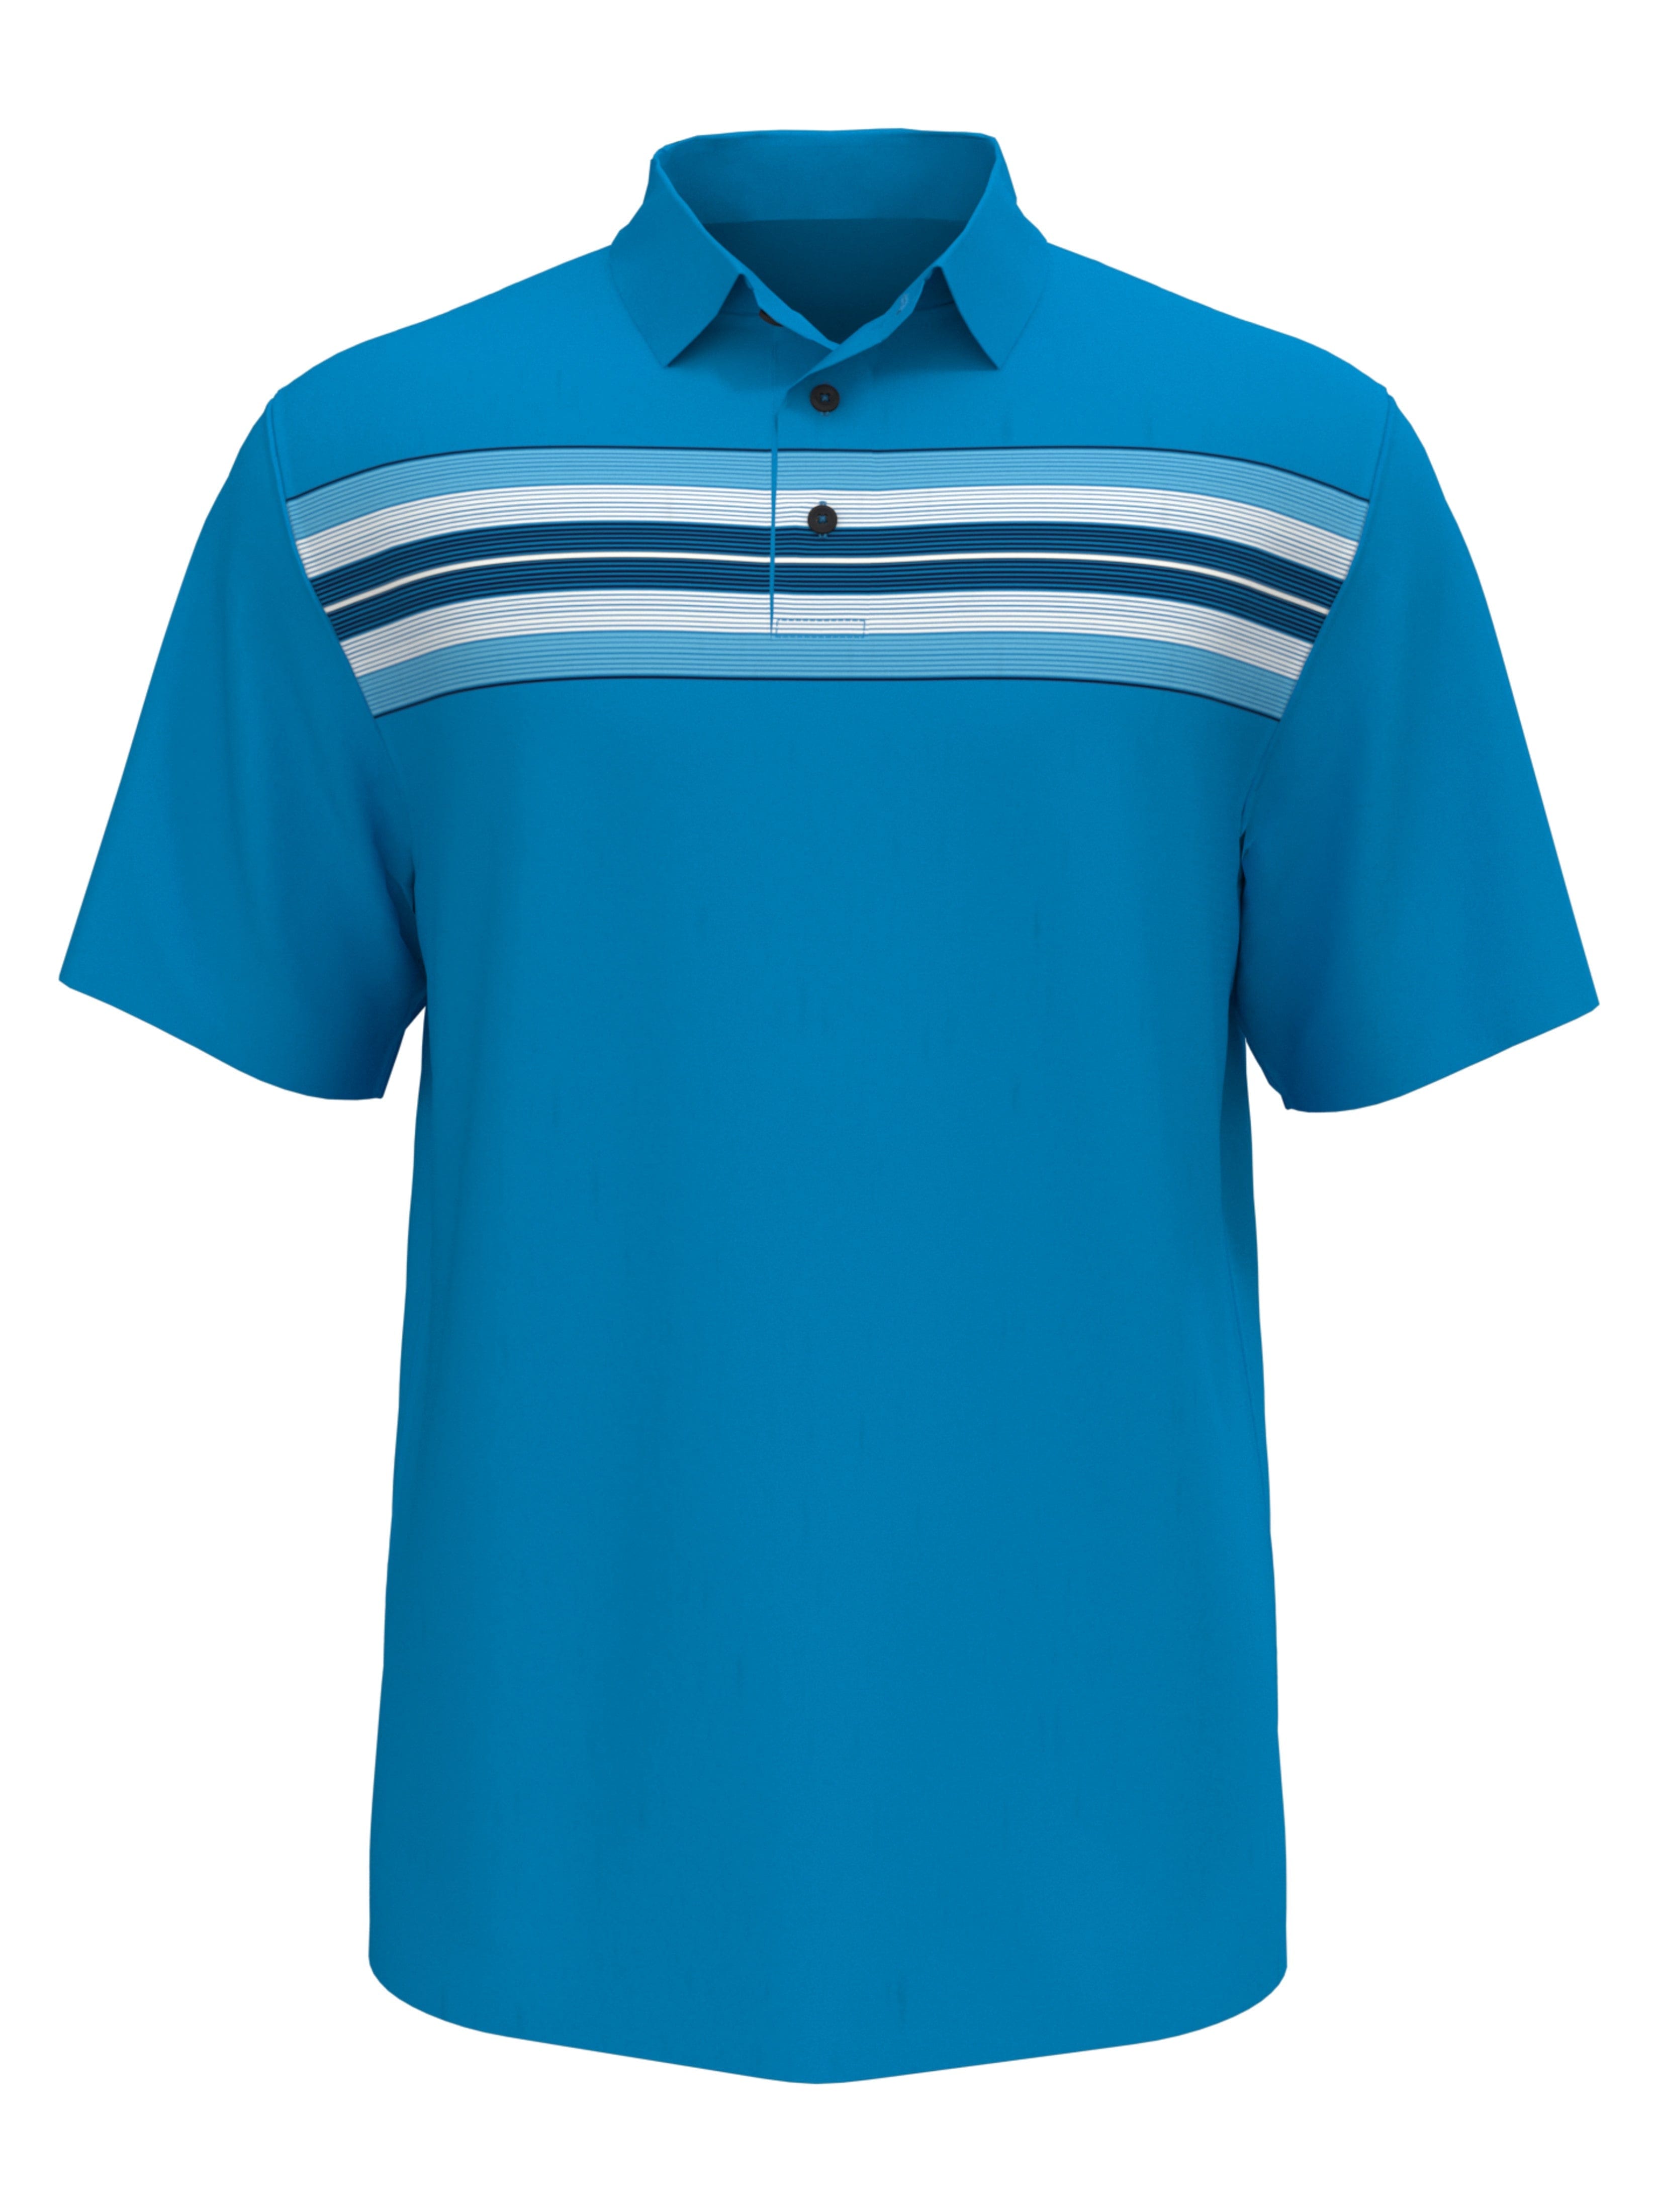 Jack Nicklaus Mens Chest Energy Stripe Polo Shirt, Size Medium, Blithe Blue, 100% Polyester | Golf Apparel Shop